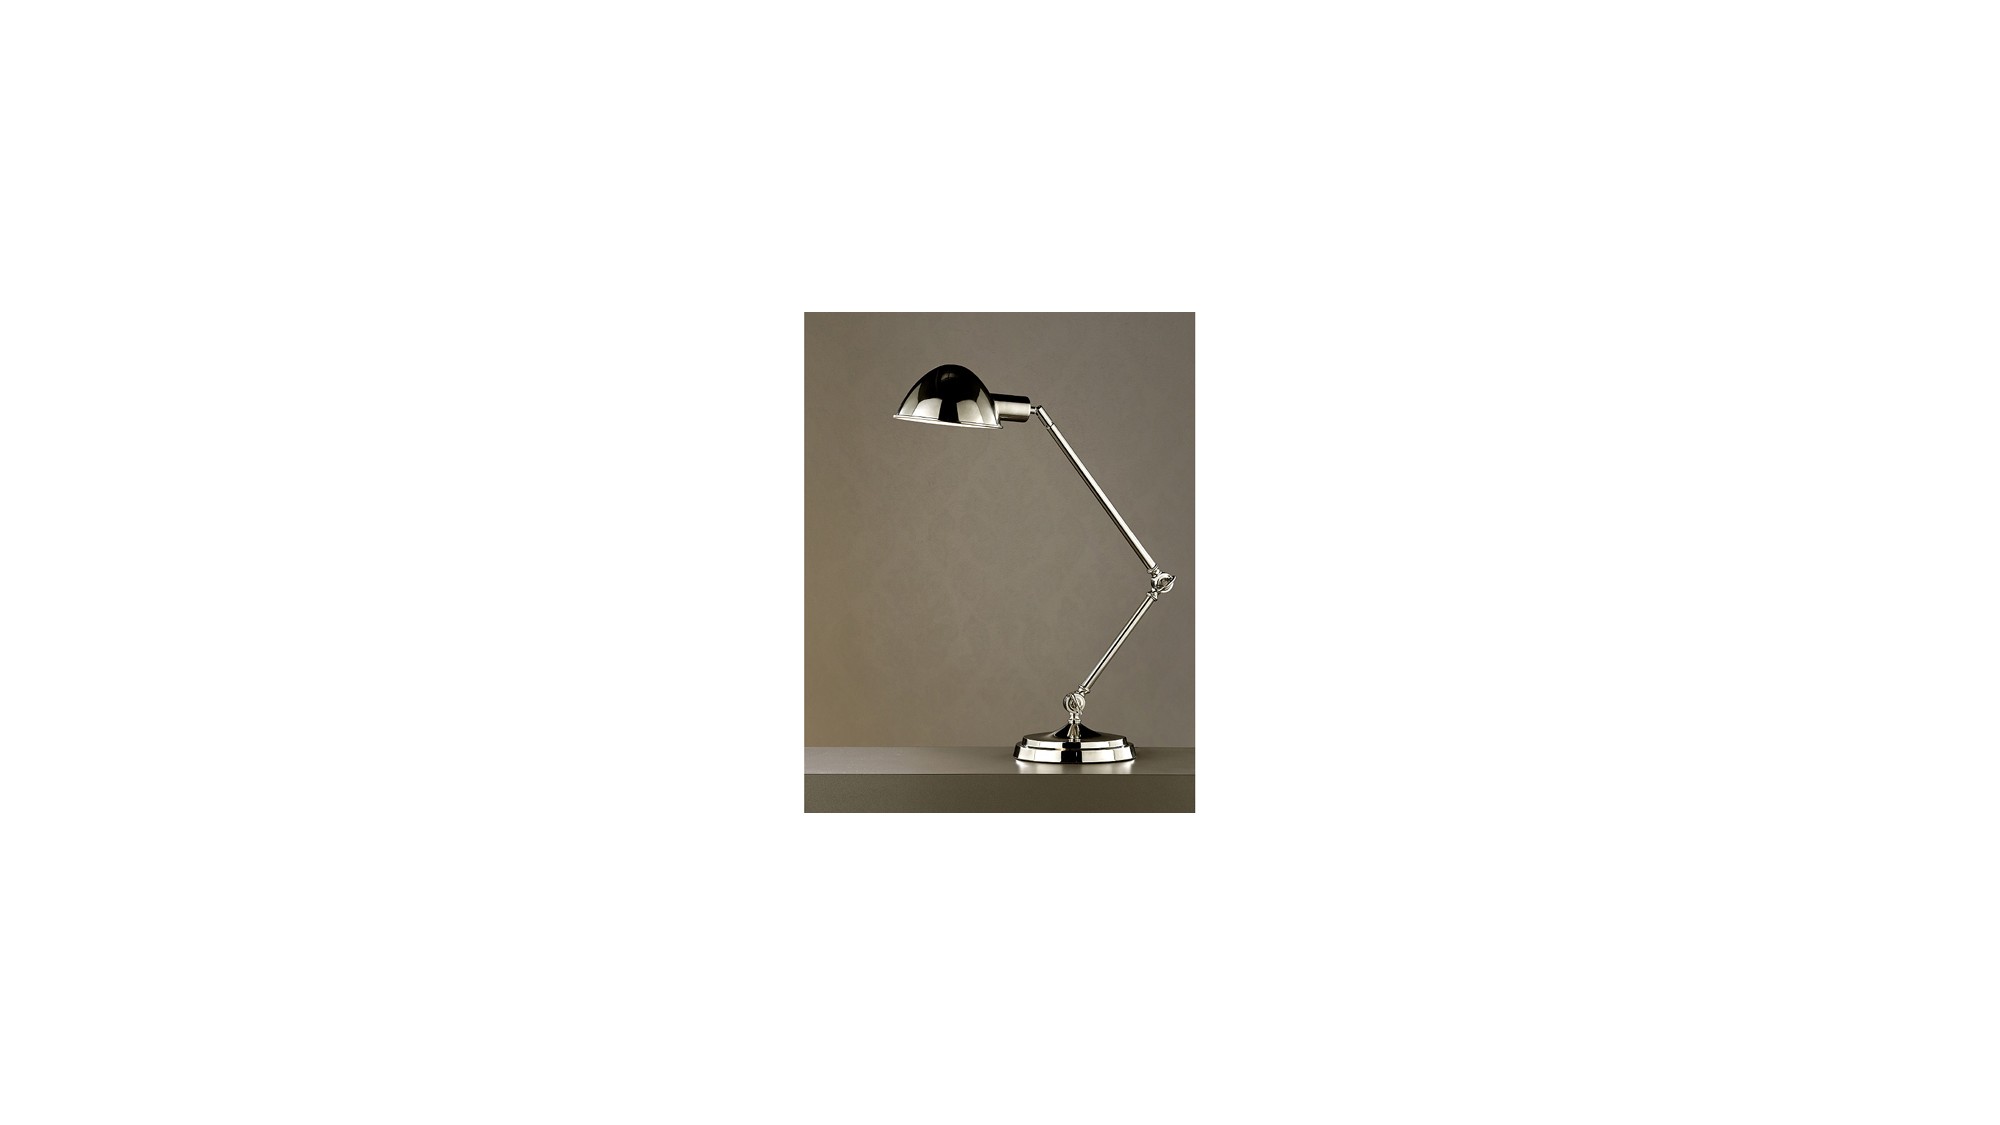 Stanton Adjustable Desk Lamp